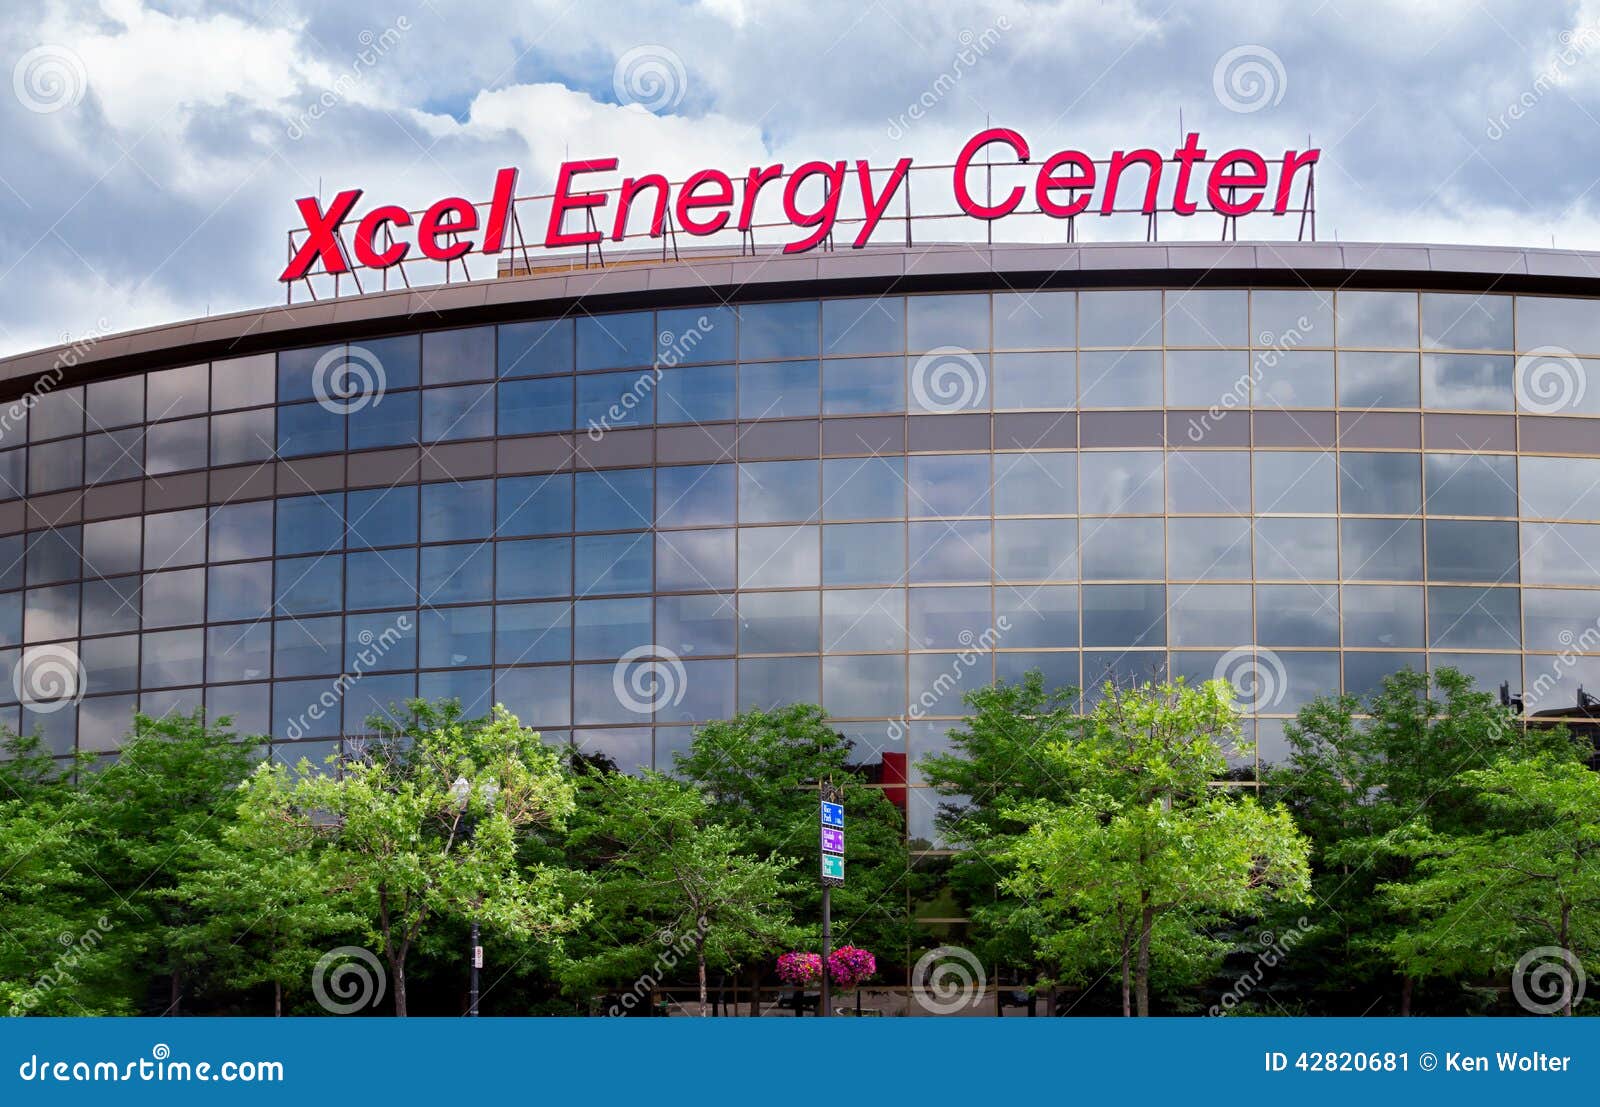 Xcel Energy Center Editorial Photo - Image: 42820681